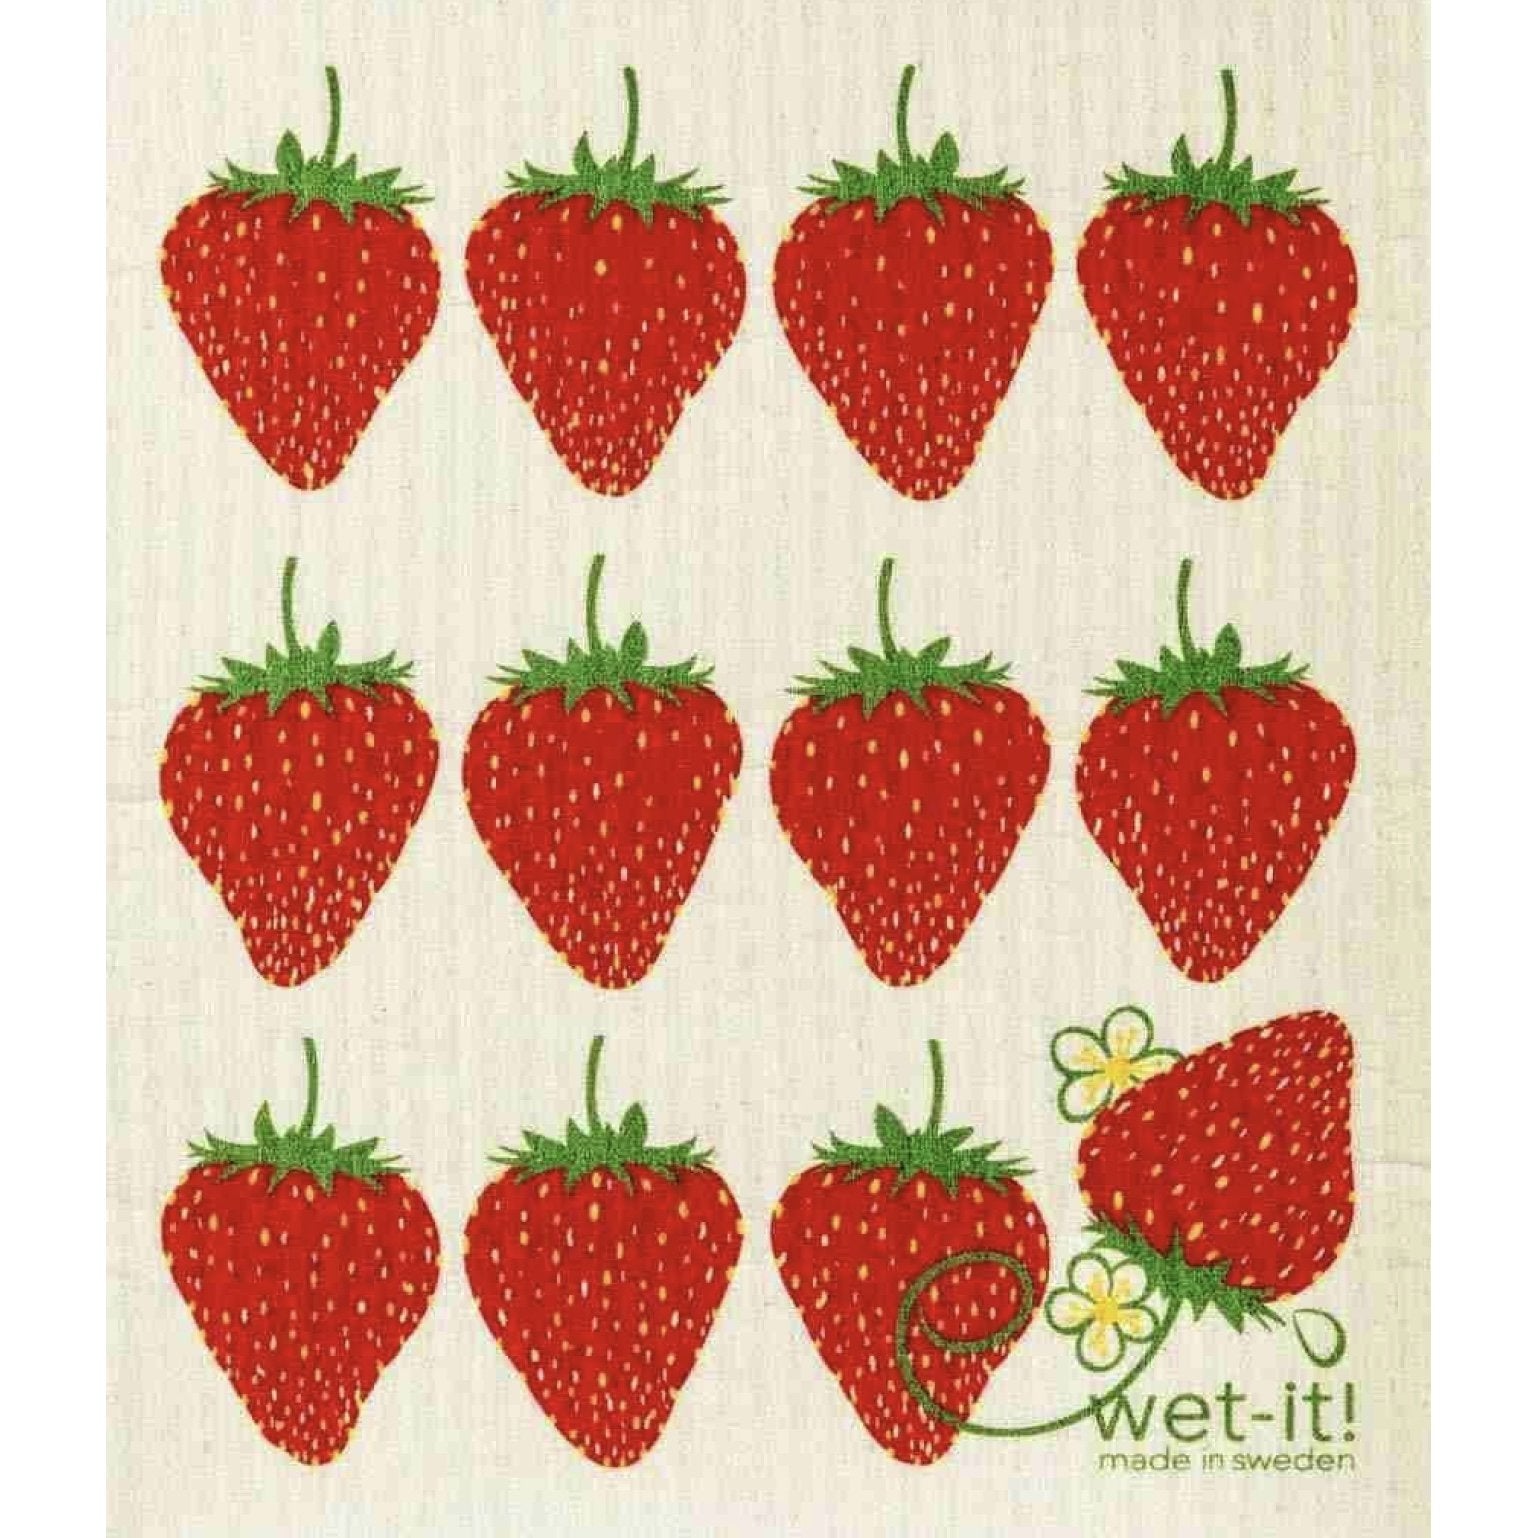 Wet-It! Strawberries